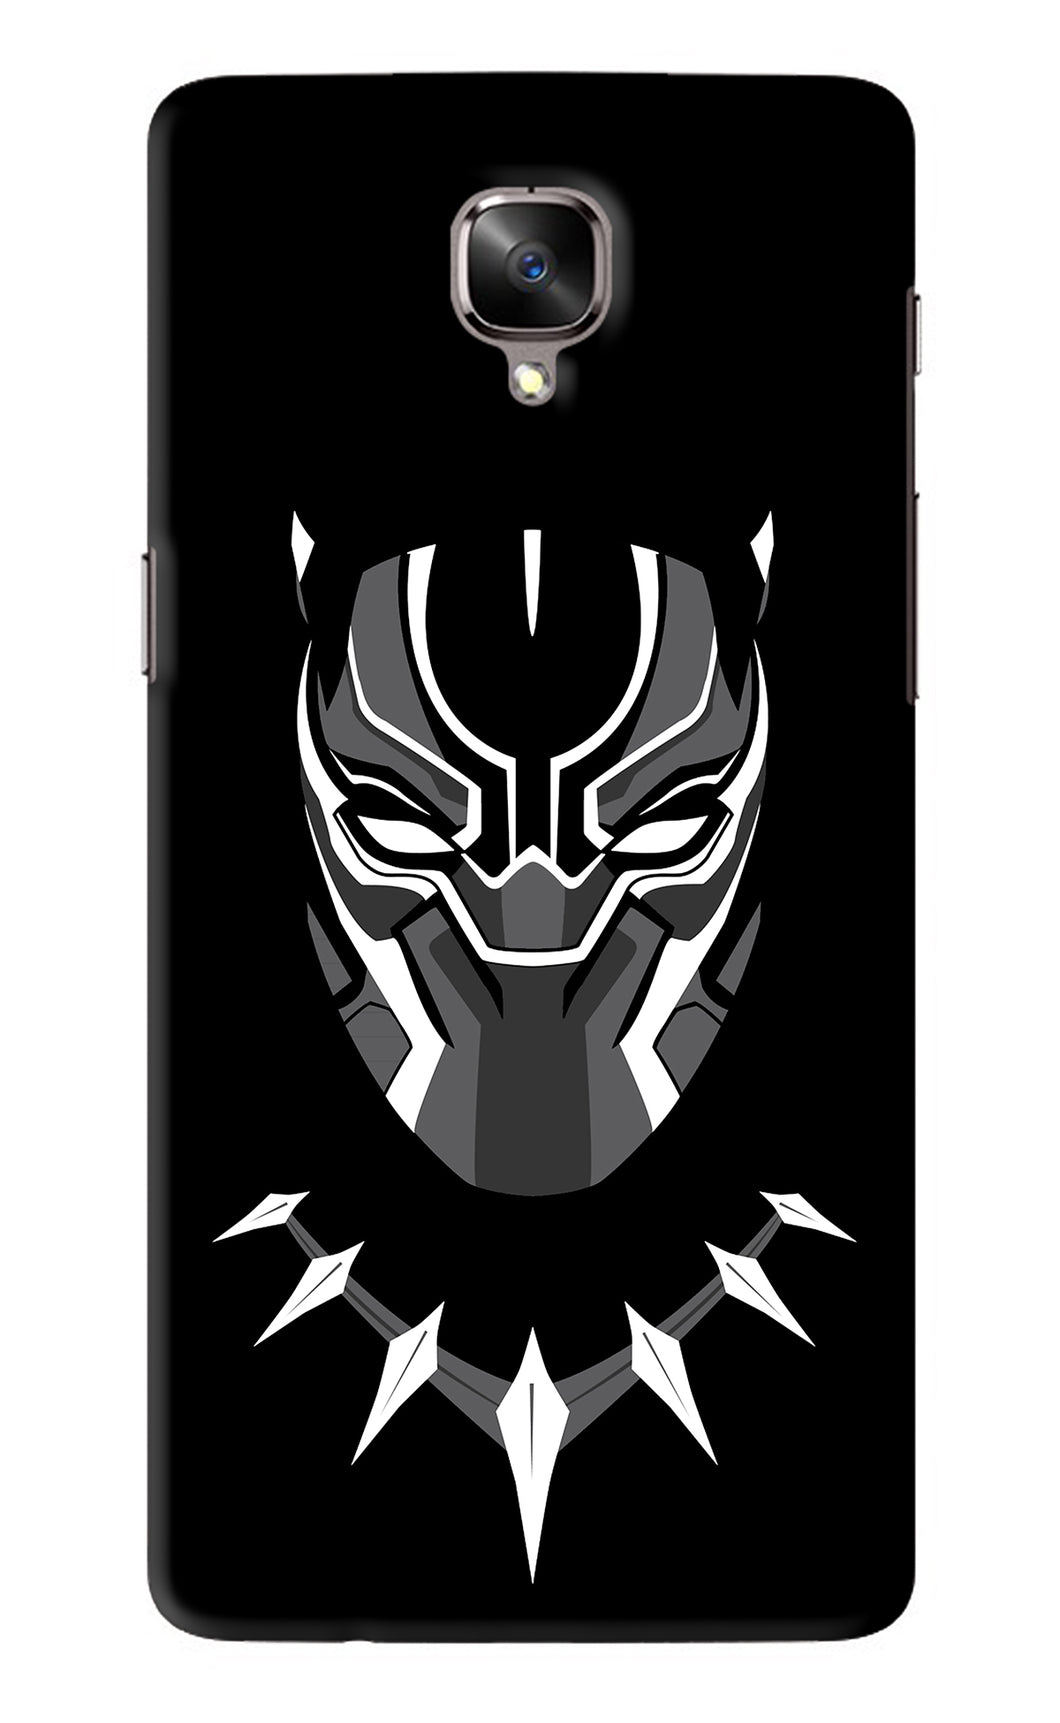 Black Panther OnePlus 3T Back Skin Wrap